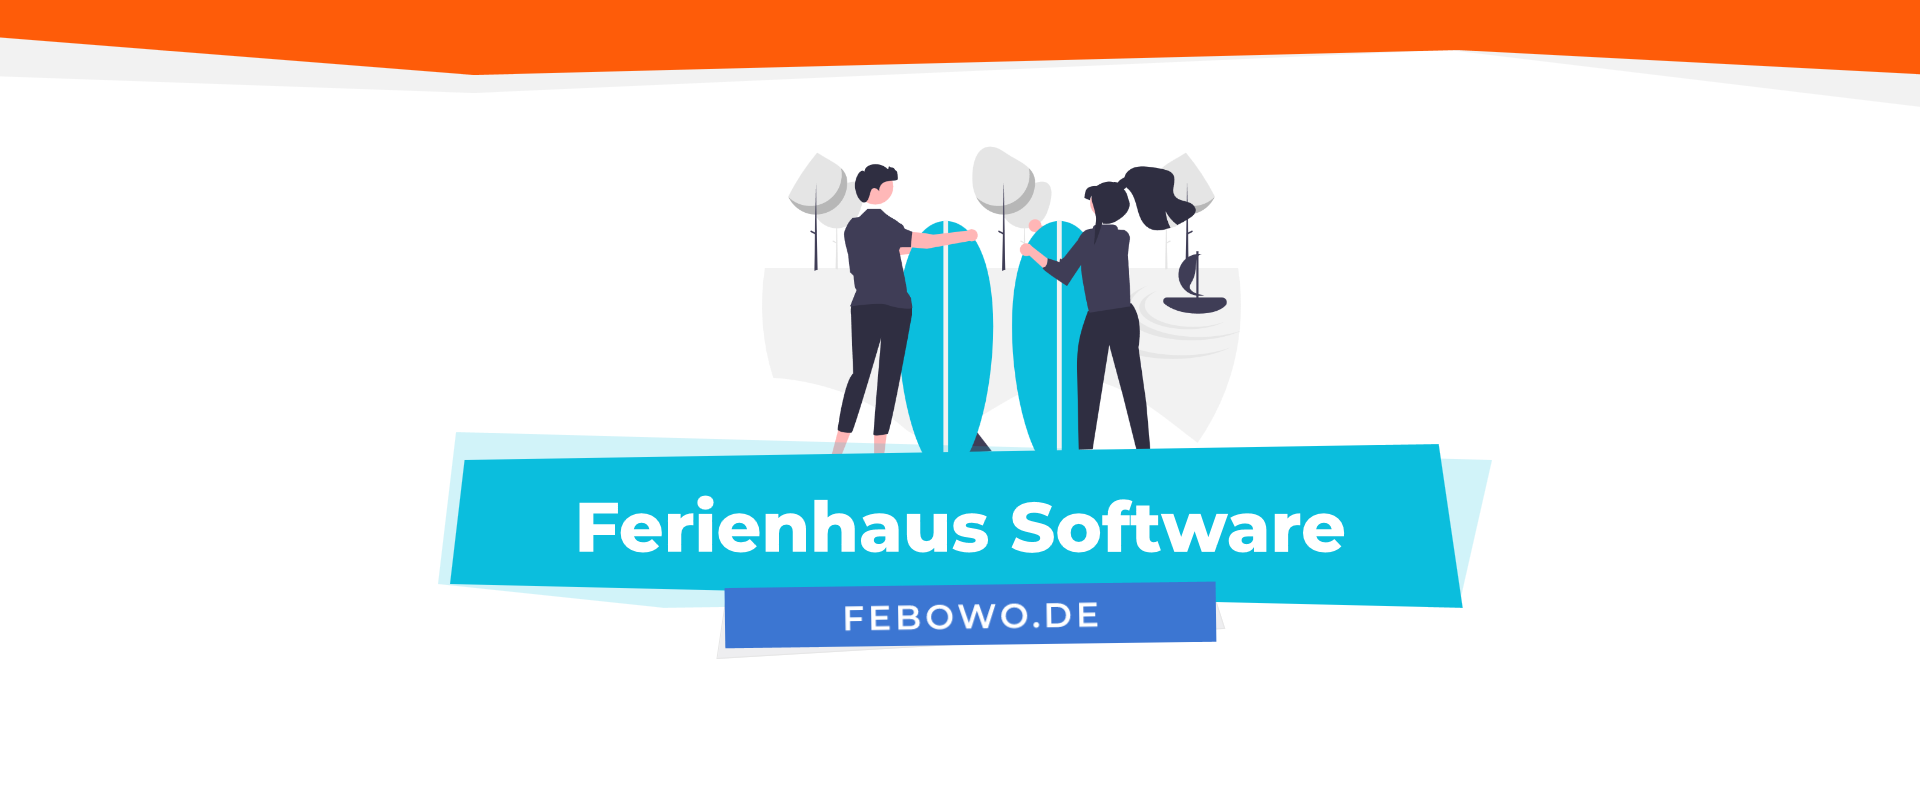 Febowo: Ferienhaus Software Programmierung